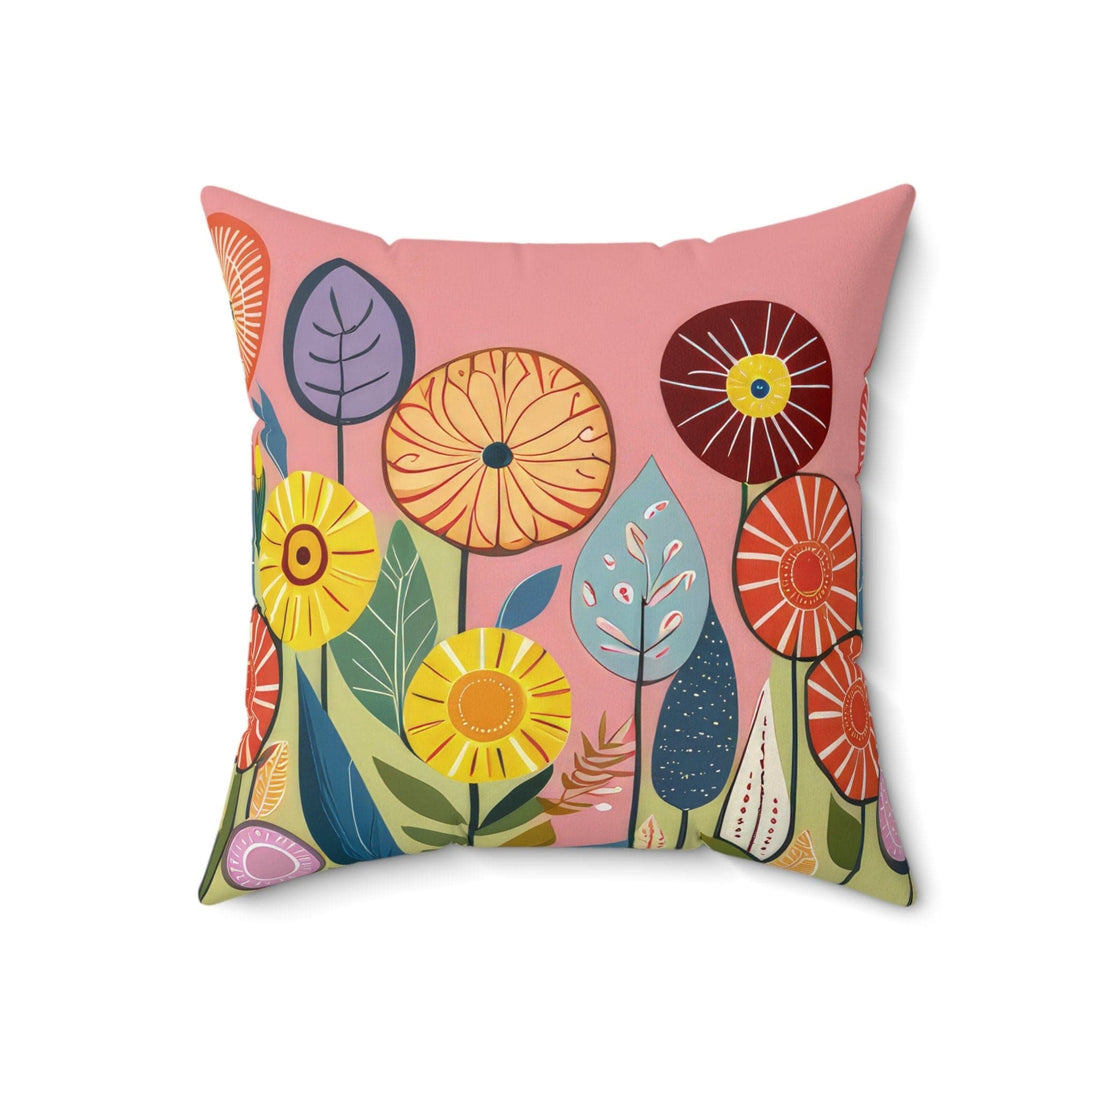 Kate McEnroe New York Boho Whimsical Floral Throw Pillow, Vibrant Folk Art Flowers on Pink Accent Pillow, Cottagecore Living Room, Bedroom DecorThrow Pillows46469521633154960674